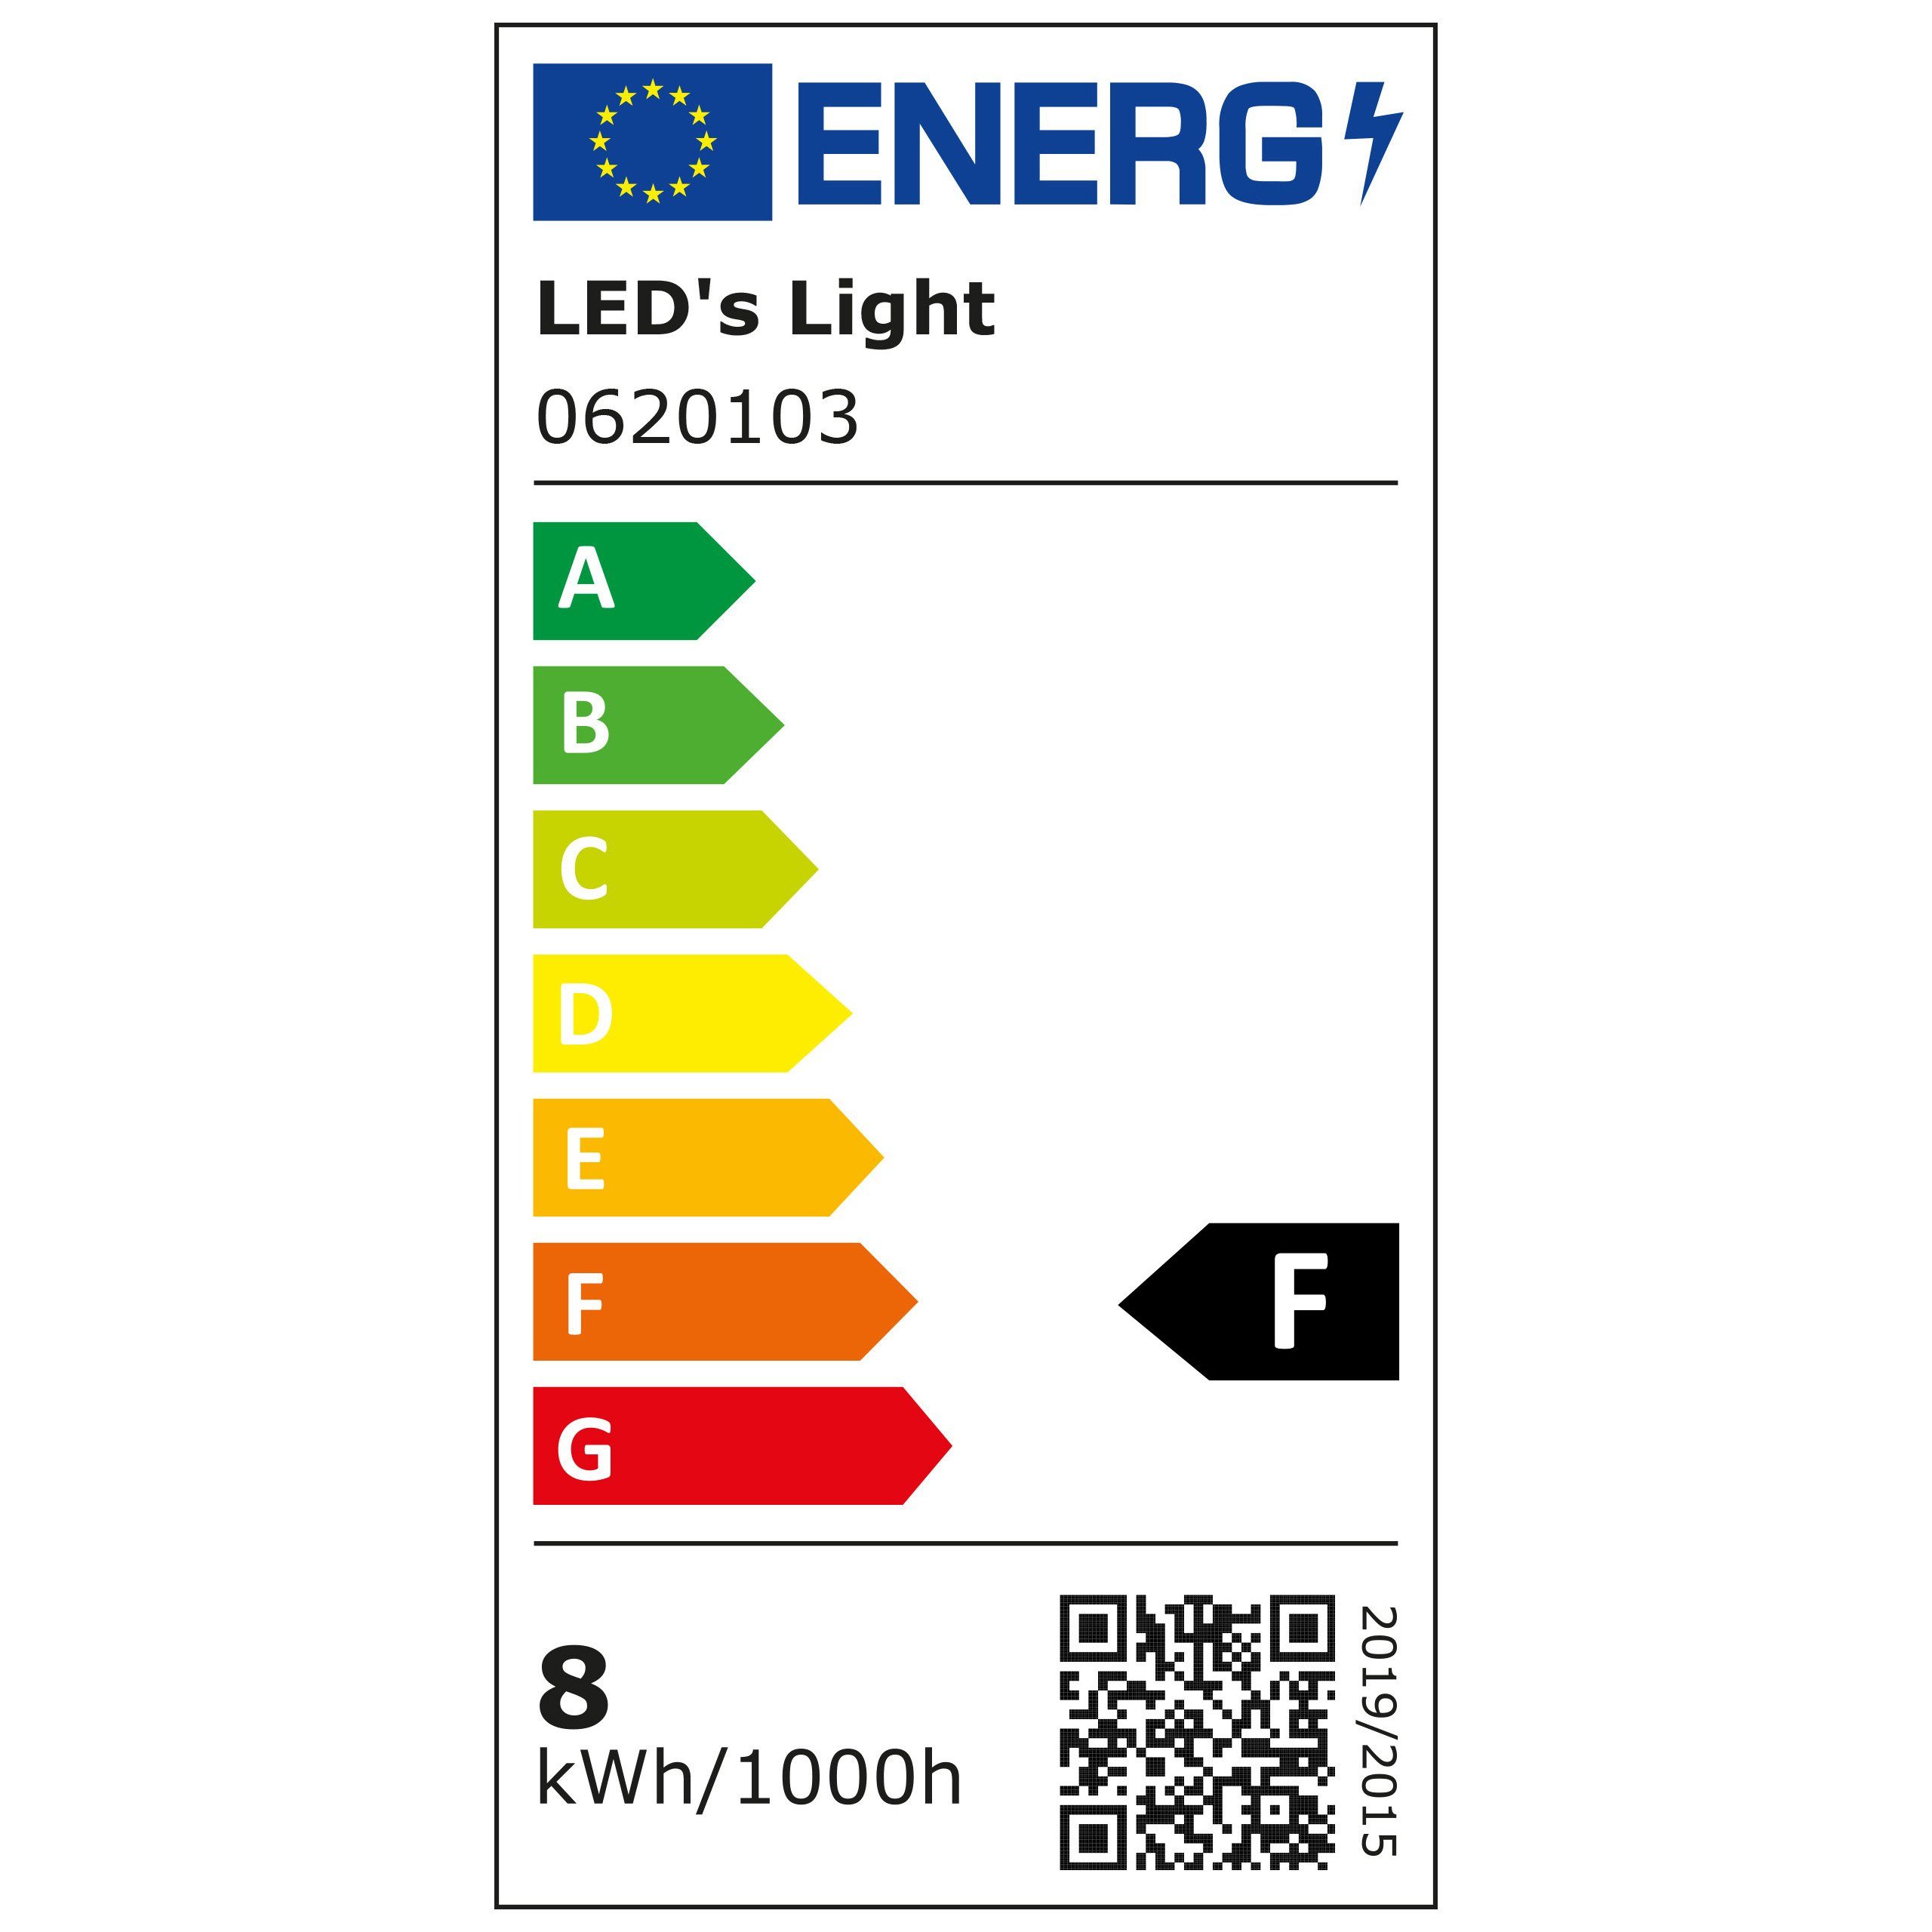 8W LED LED's Opal E27 light E27, 620103 Glühbirne, LED-Leuchtmittel A60 neutralweiß